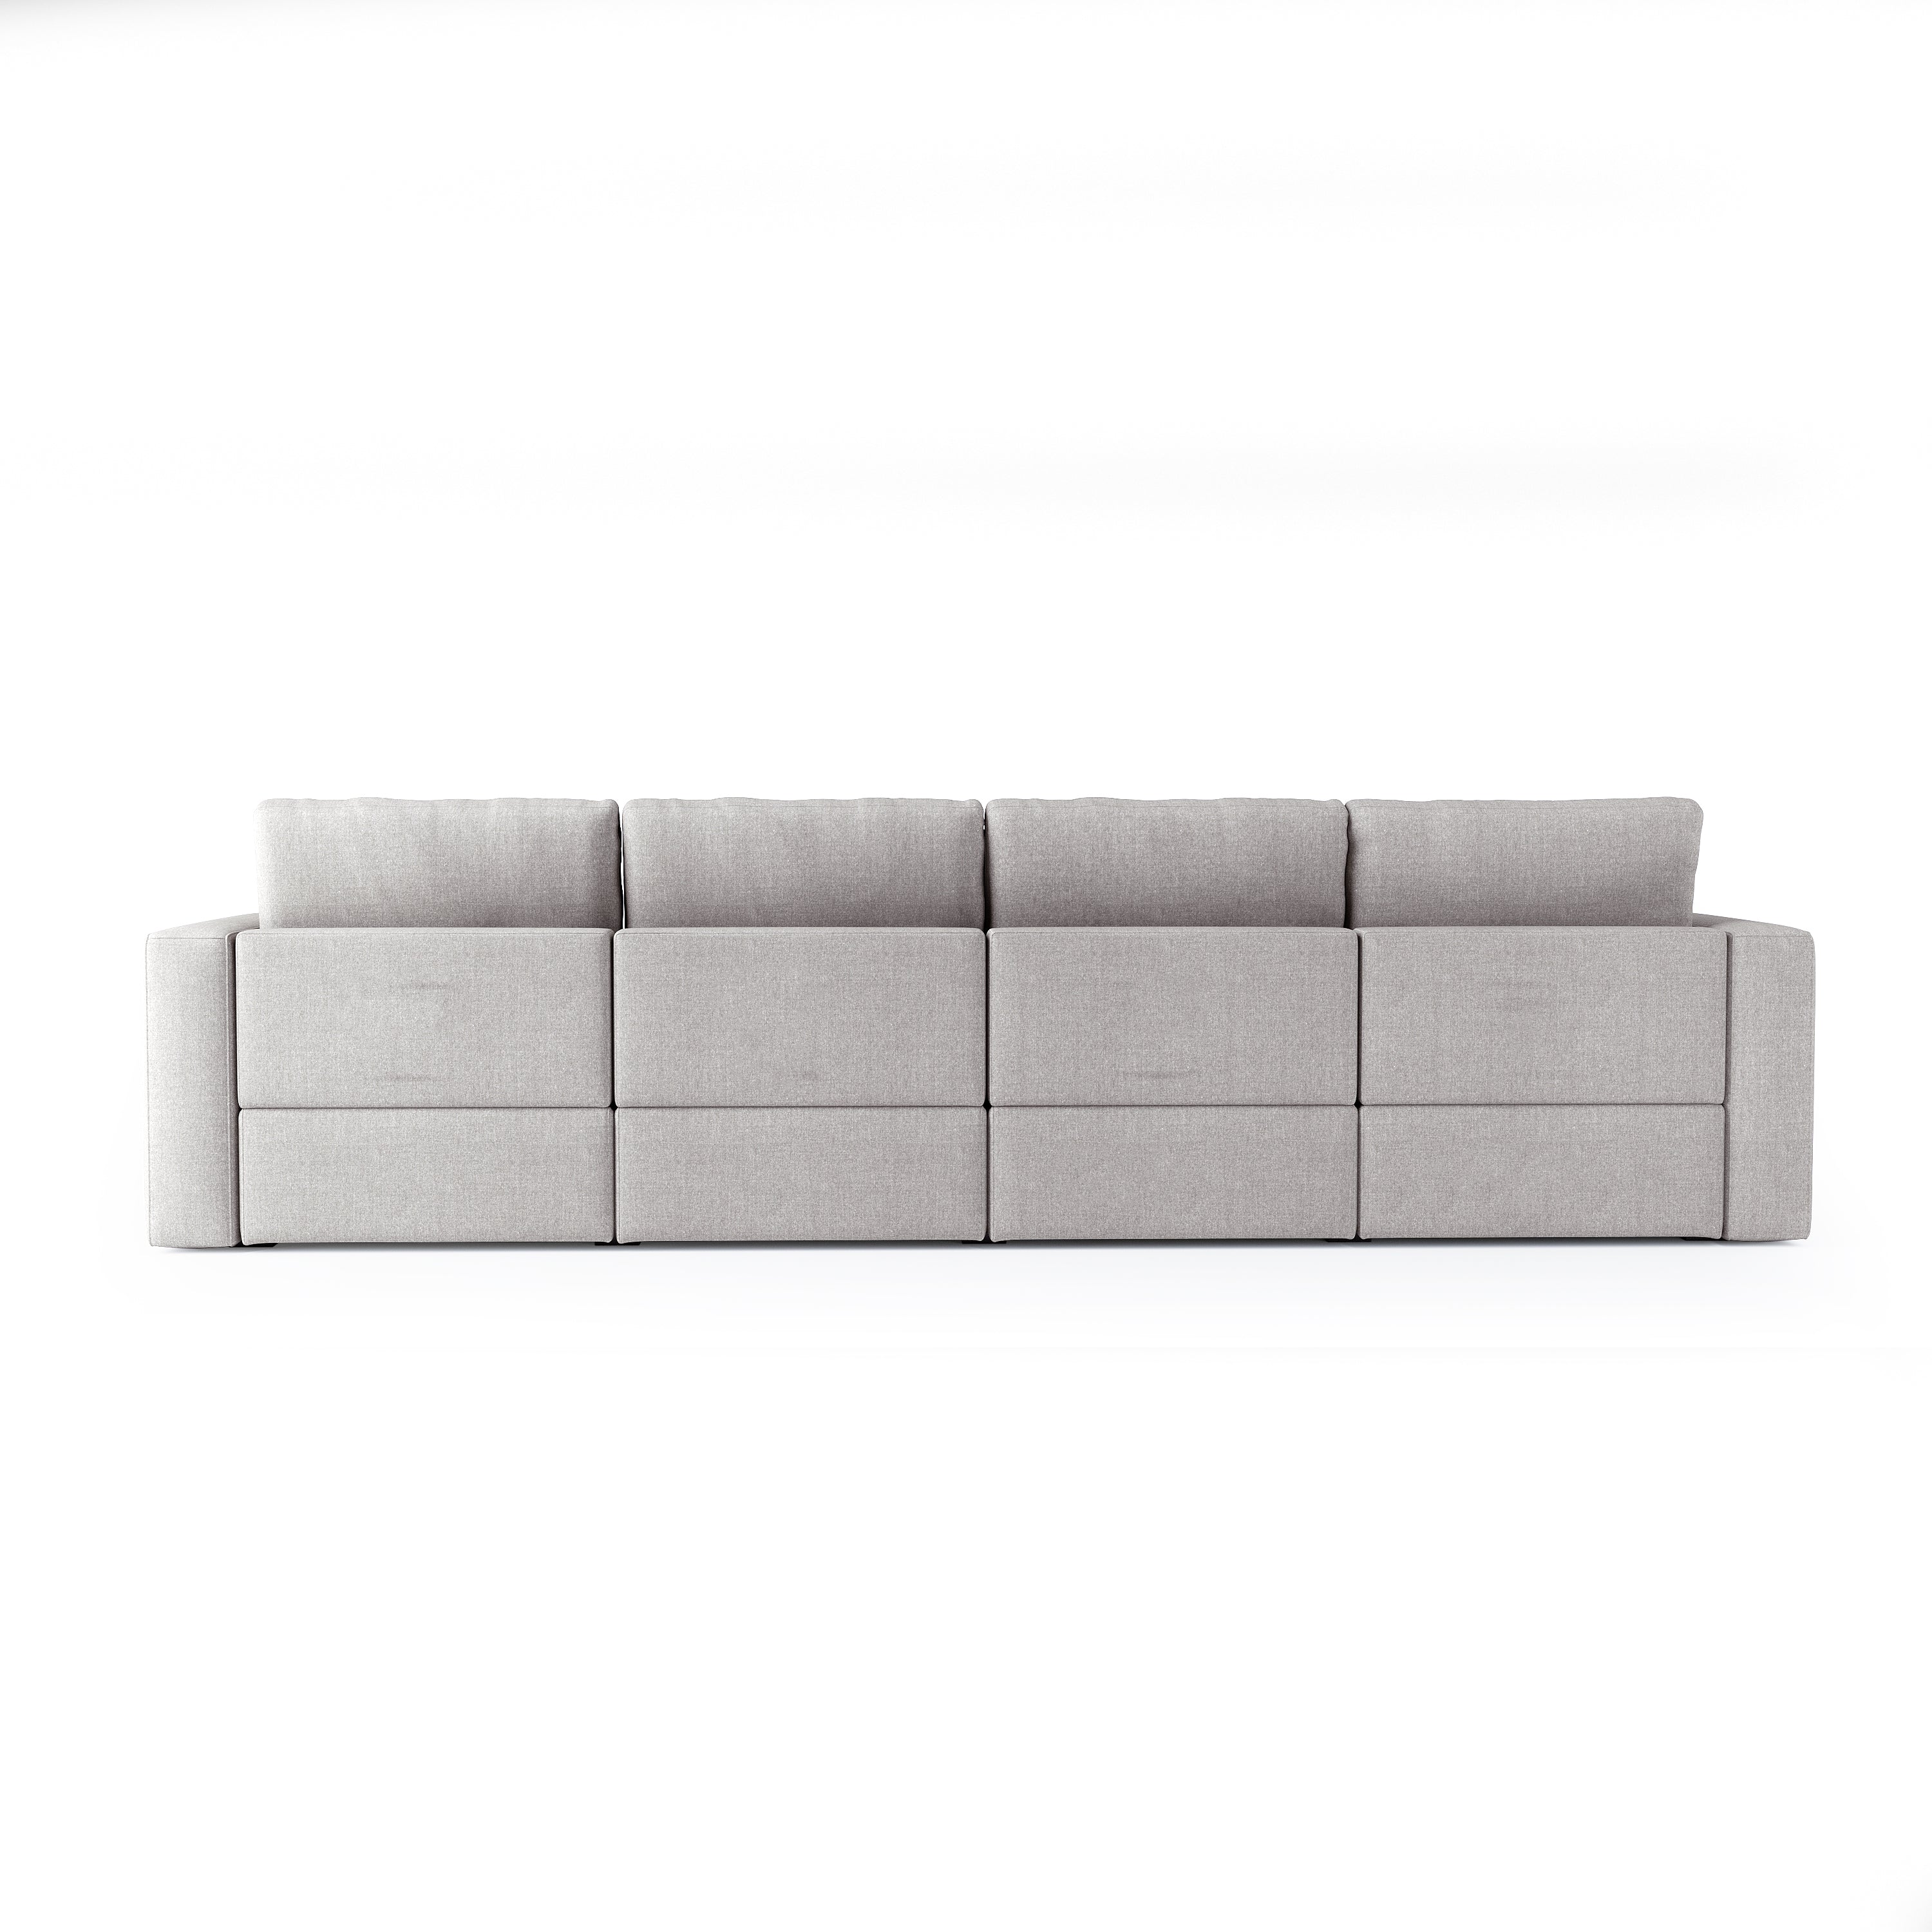 Node Sofa | L Shaped Sofa | 4 Seater (10 x 5.5 feet)